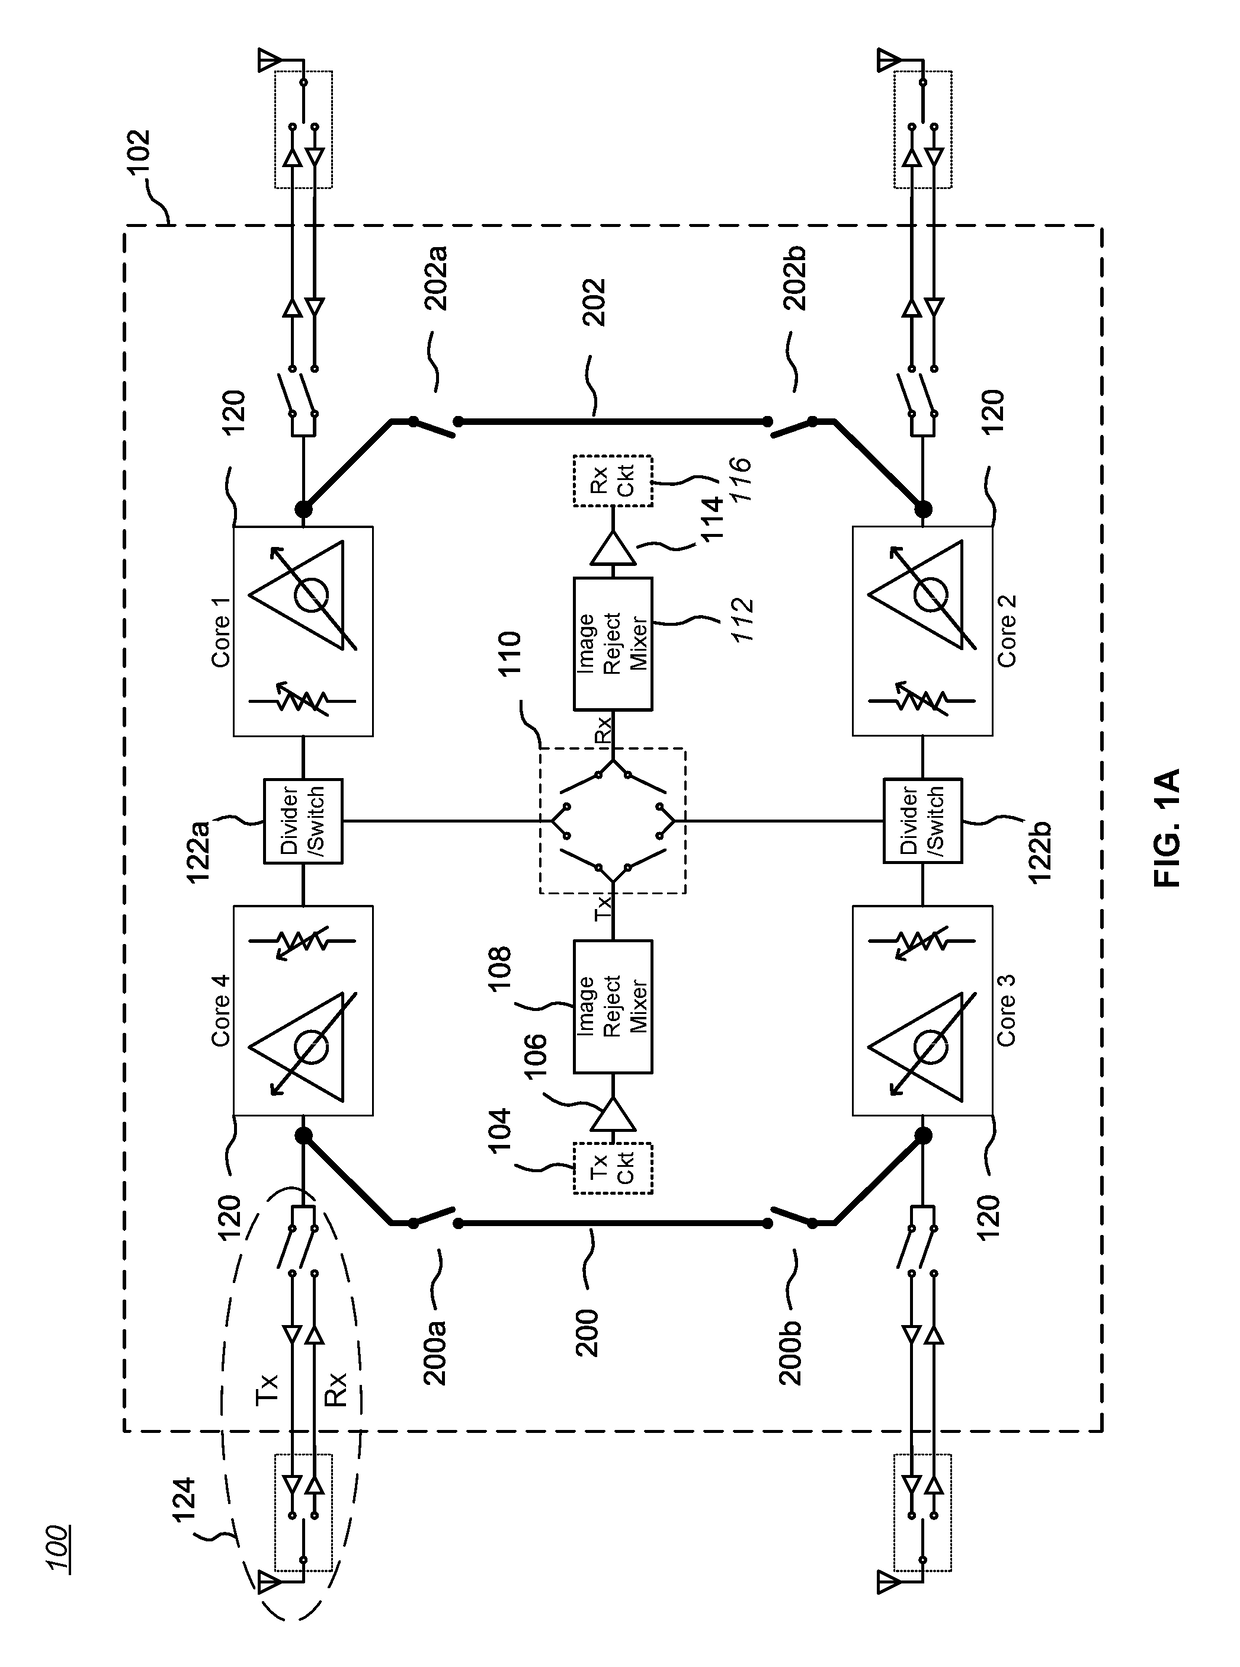 Integrated circuit calibration architecture